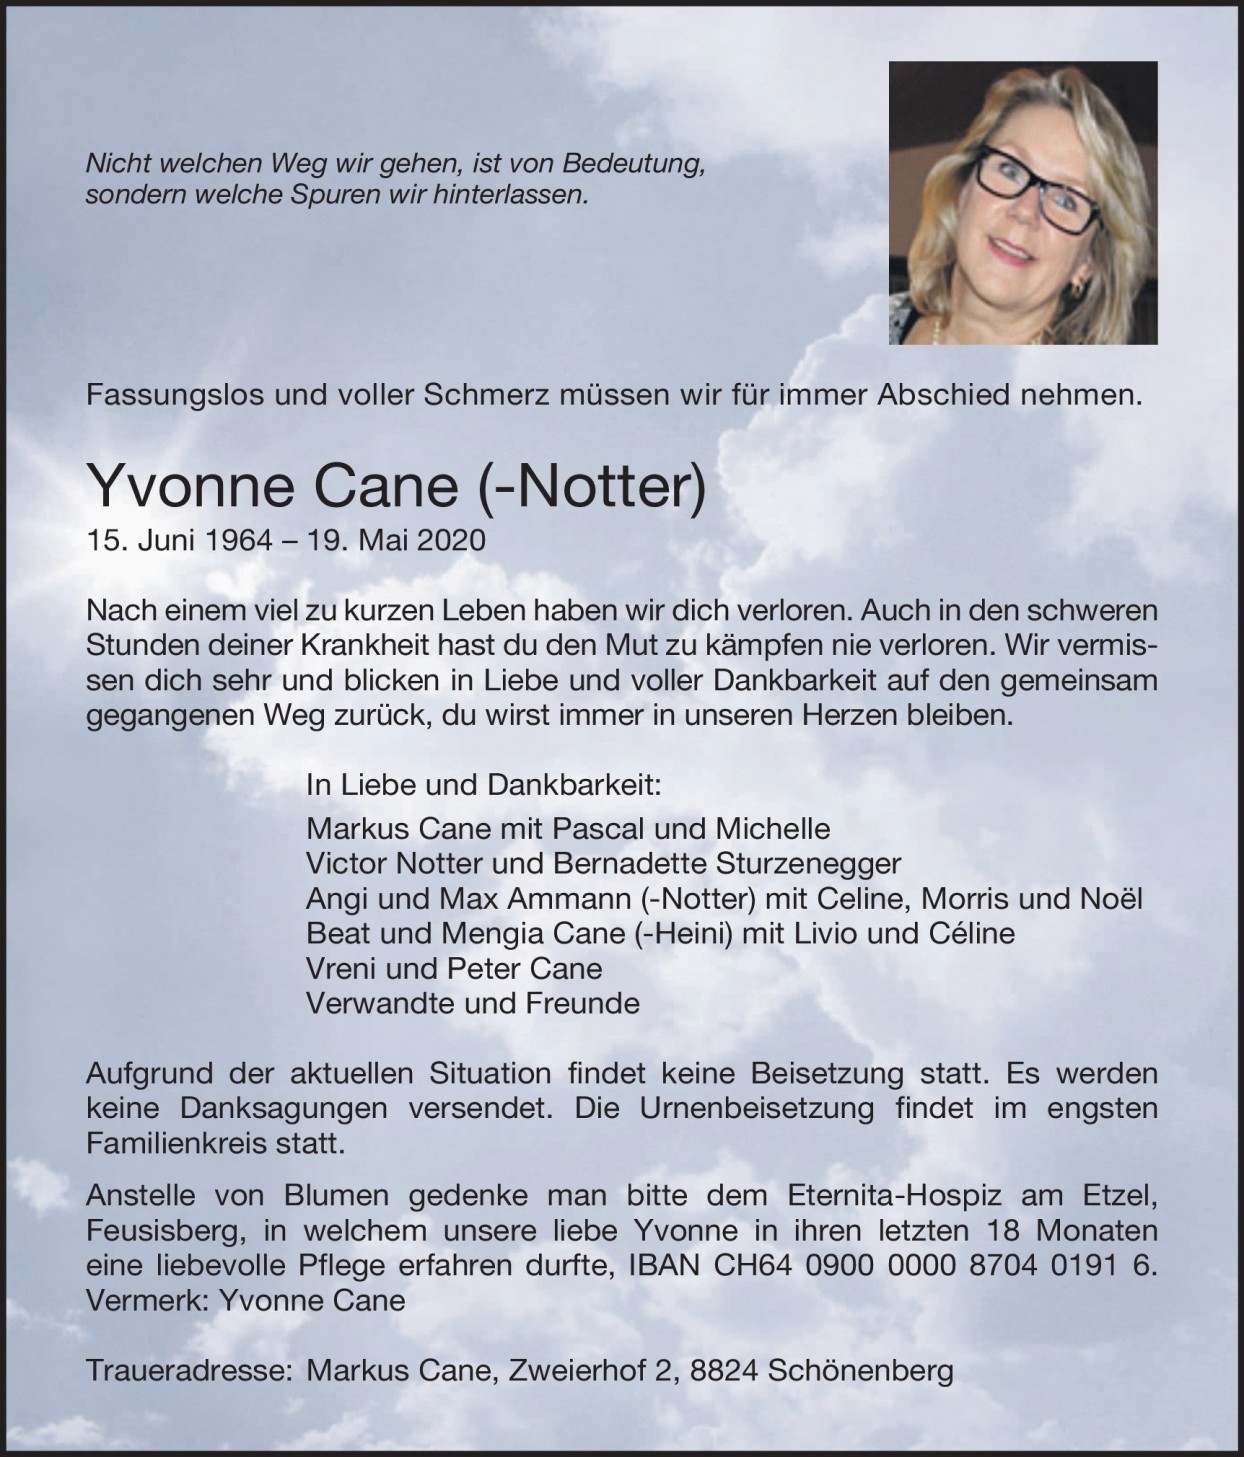 Yvonne Cane-Notter